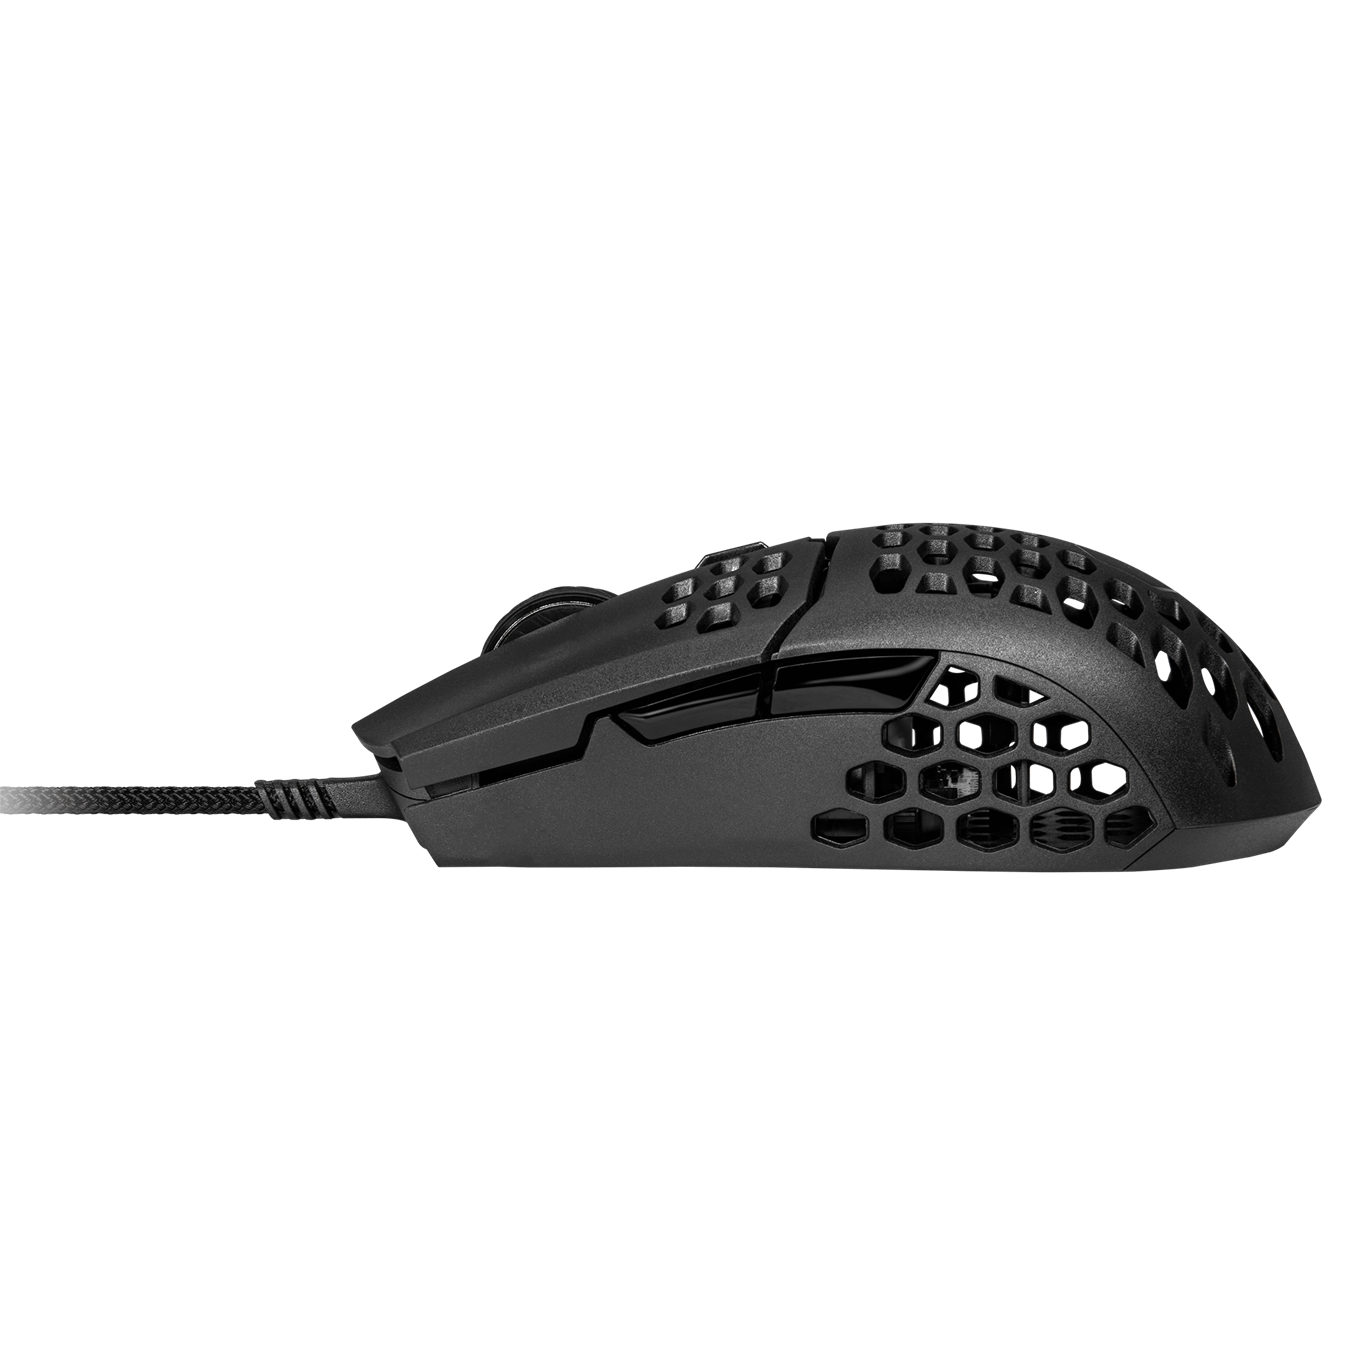 Cooler Master MM710 Lightweight Gaming Mouse